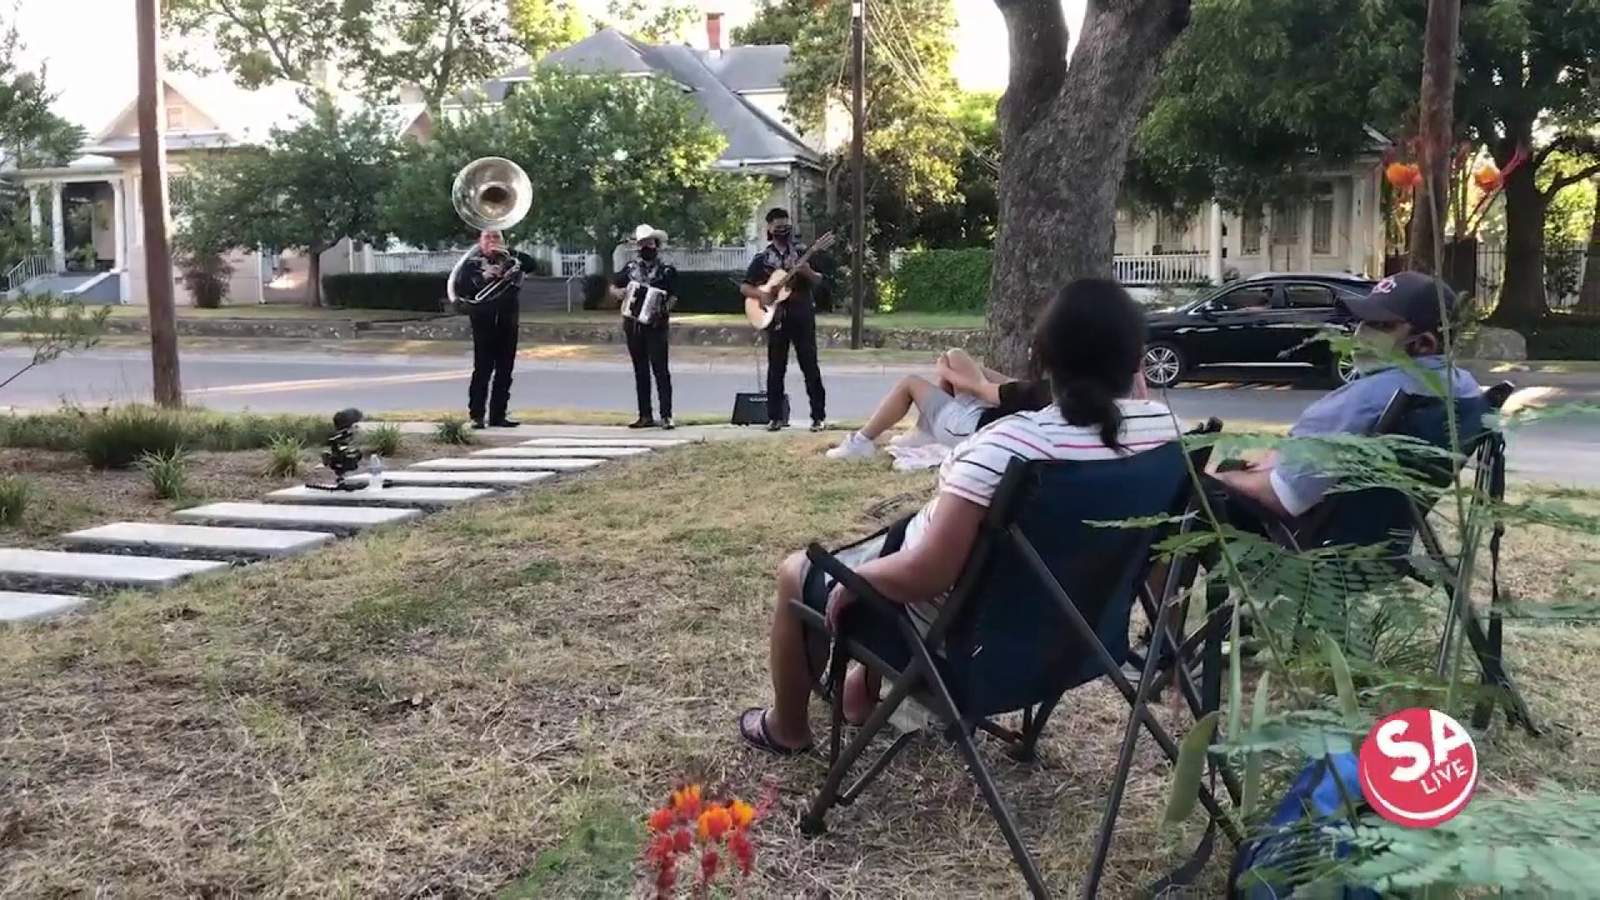 Local band delivers porchside serenades